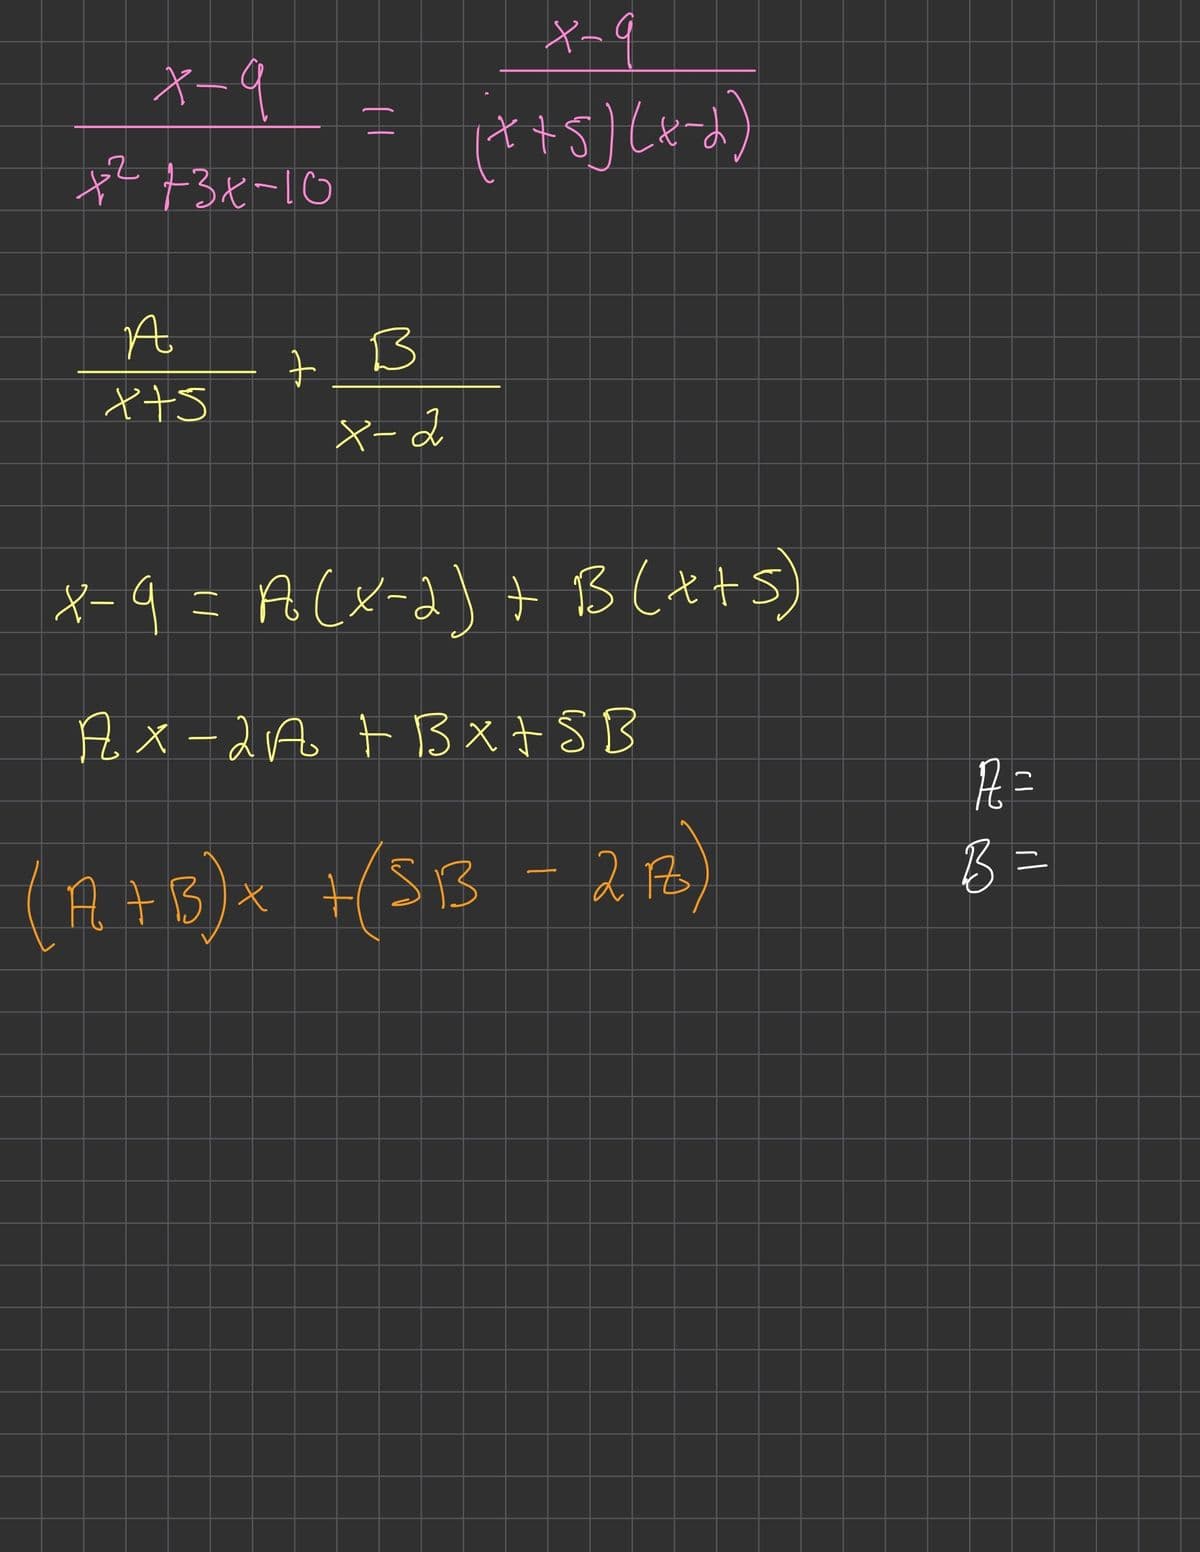 X-9
+² +3x-10
A
x+s
||
+ B
X-2
x-9
(x+5)(x-2)
X-9 = A (x-2) + B(x+5)
AX-2A + B x + 5 B
(A + B) x + (SB3 - 2 16)
R =
B =